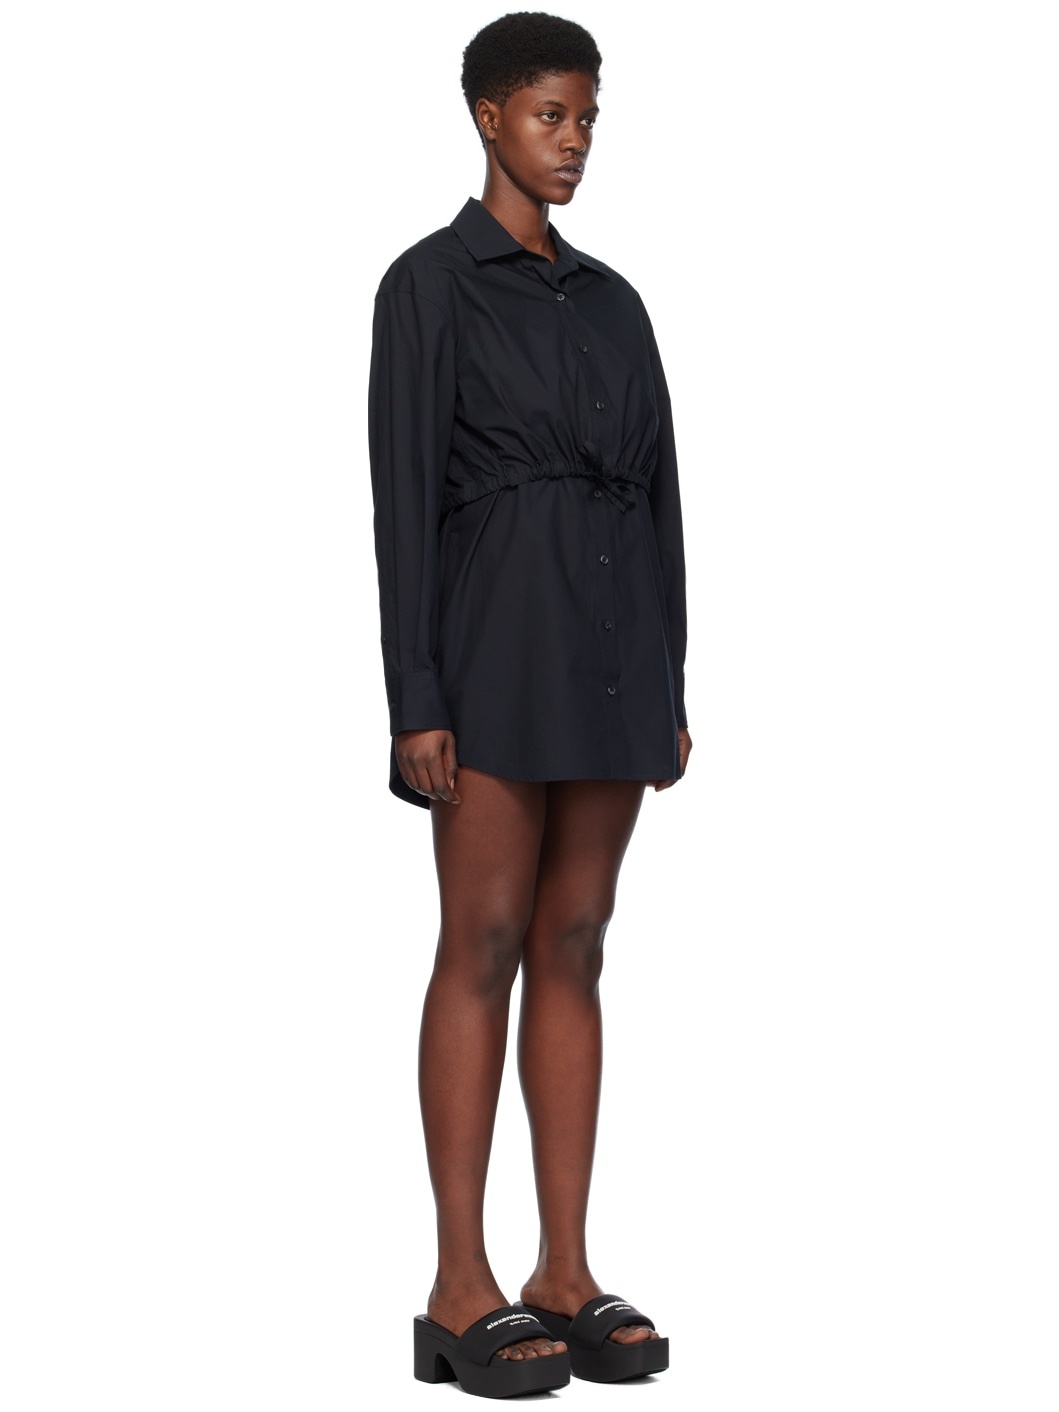 Black Layered Dress - 2